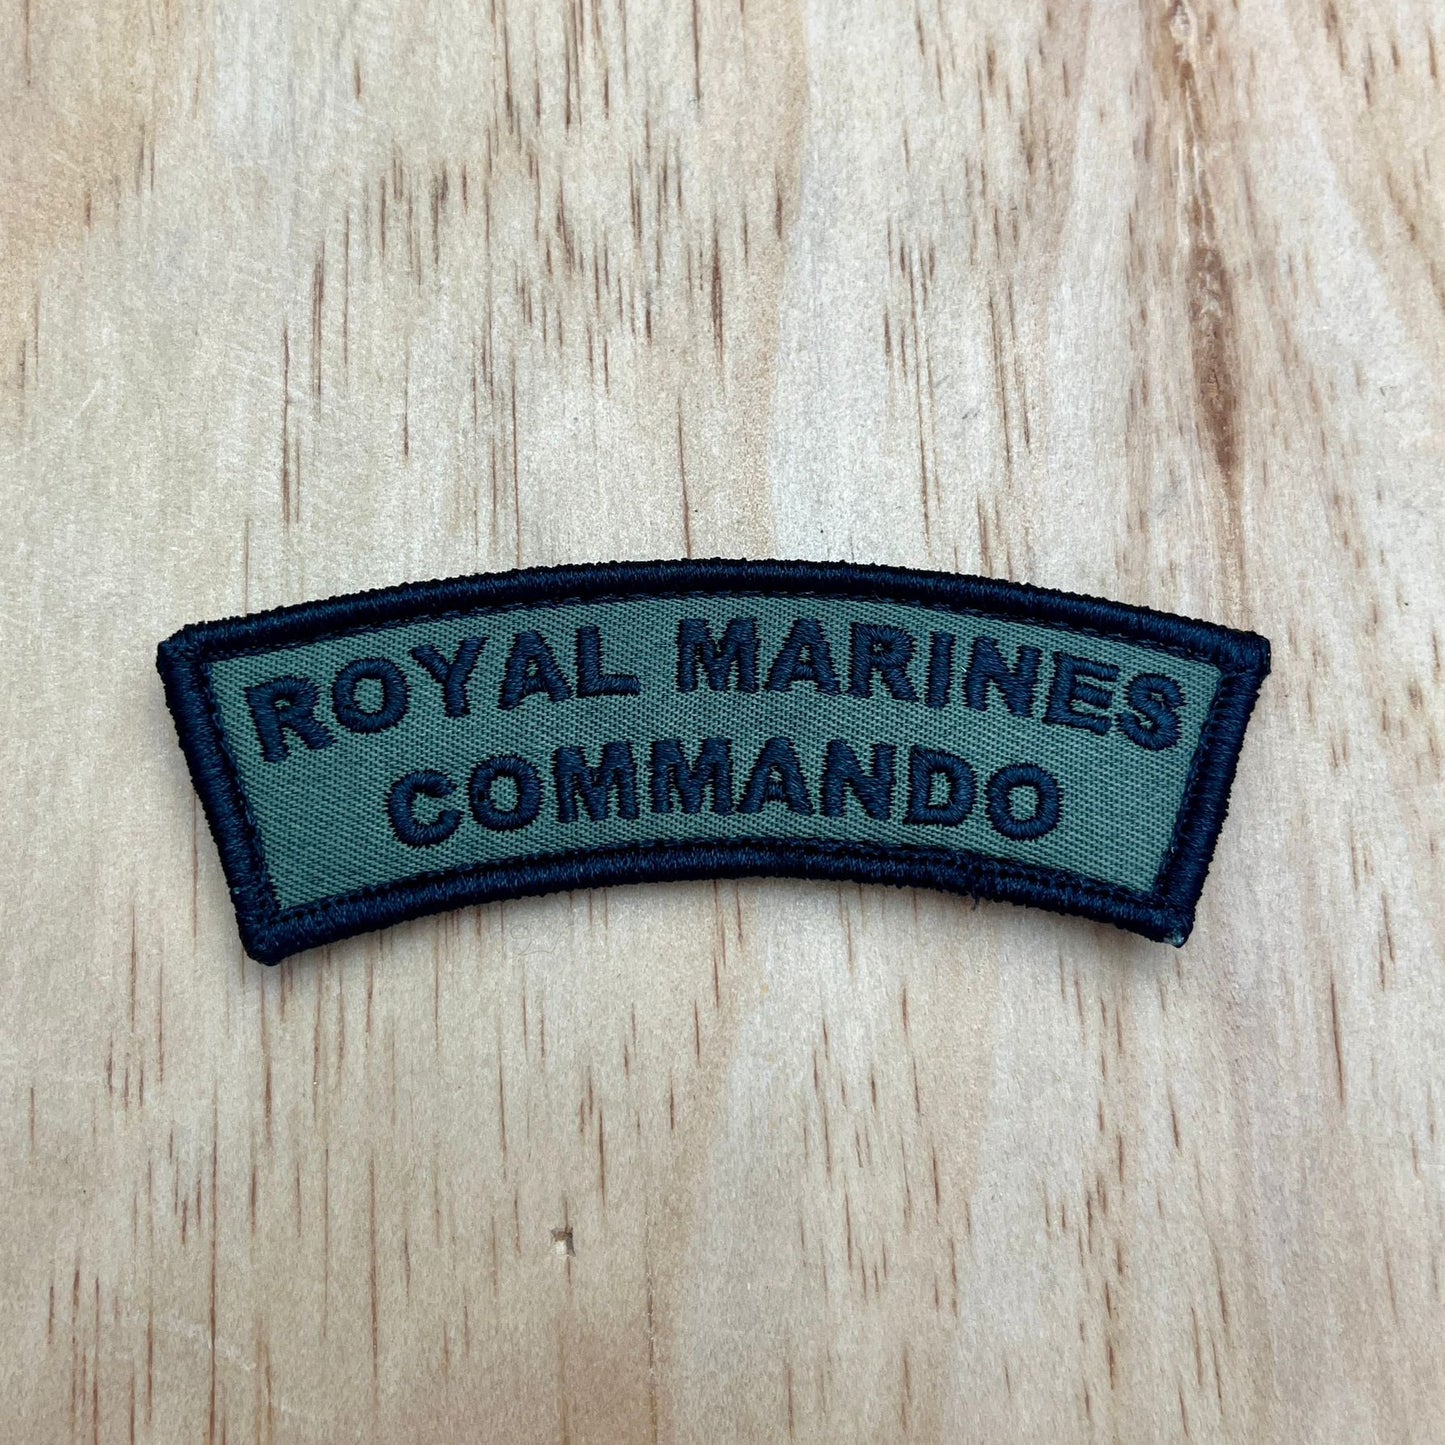 Royal Marines Commando patch